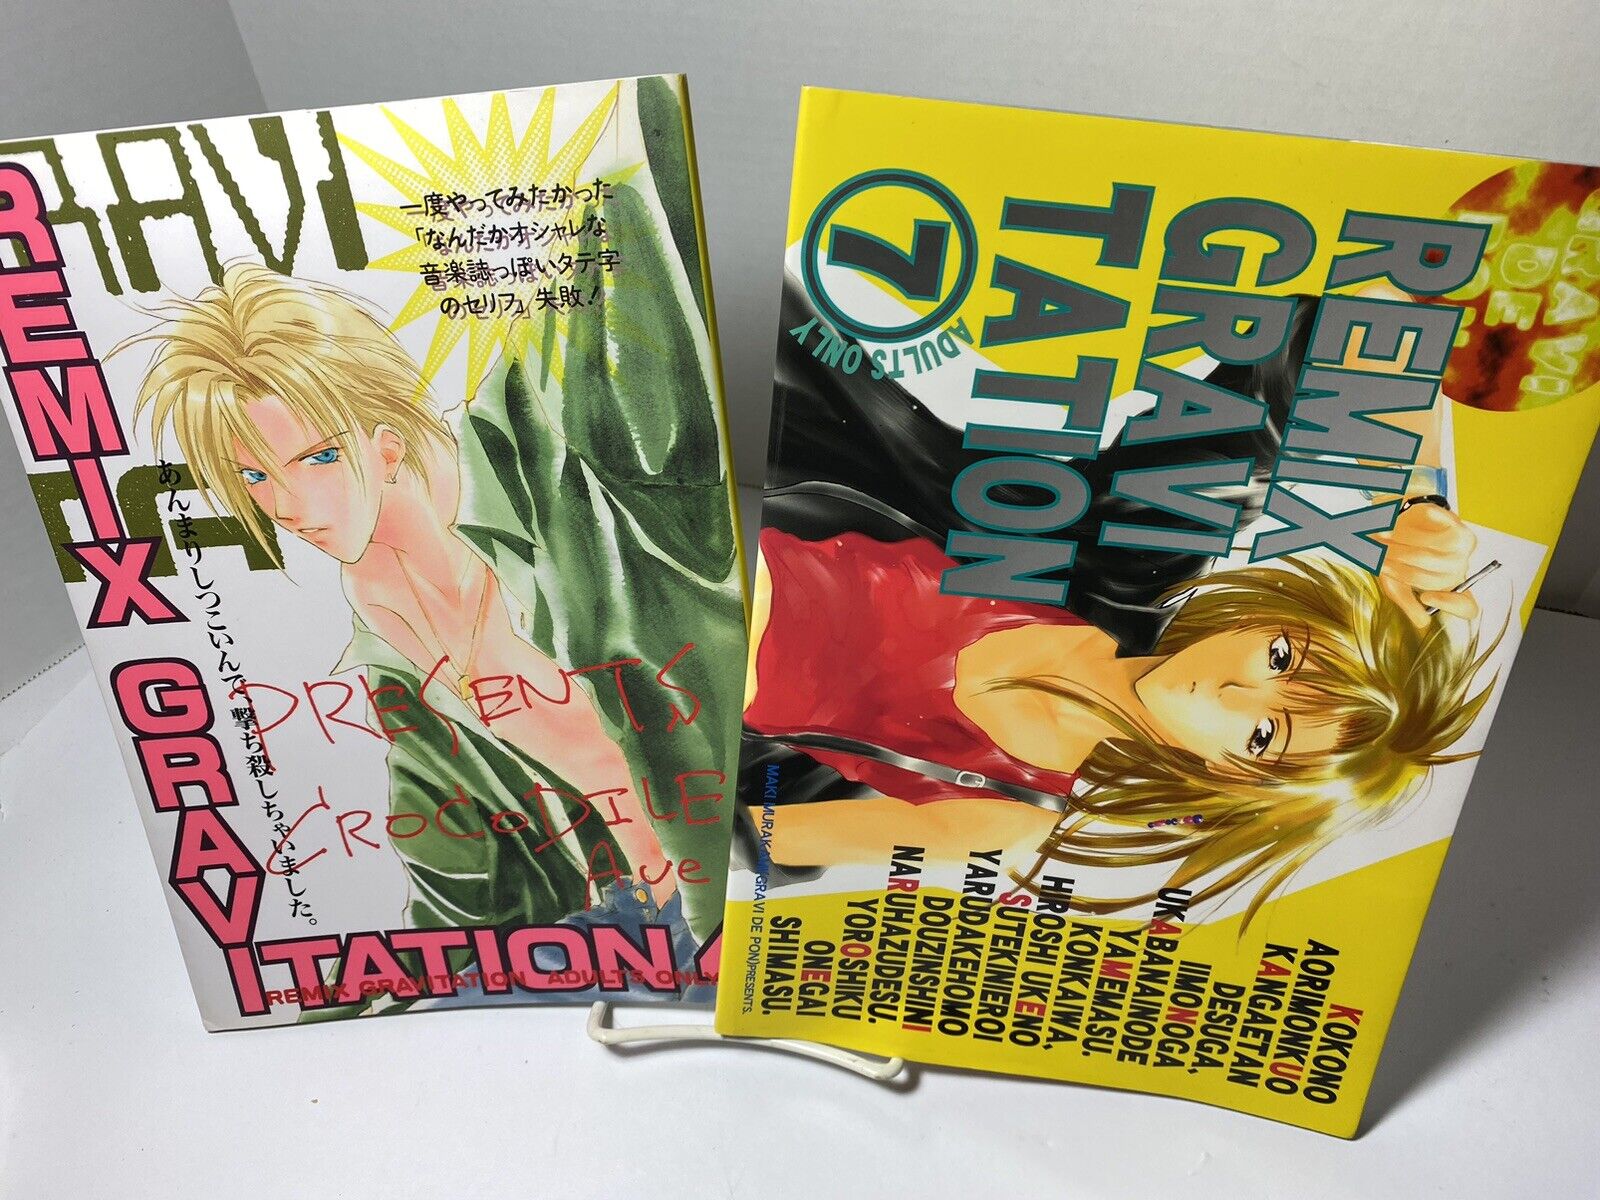 Lot of Remix Gravitation issues 4 and 7 manga